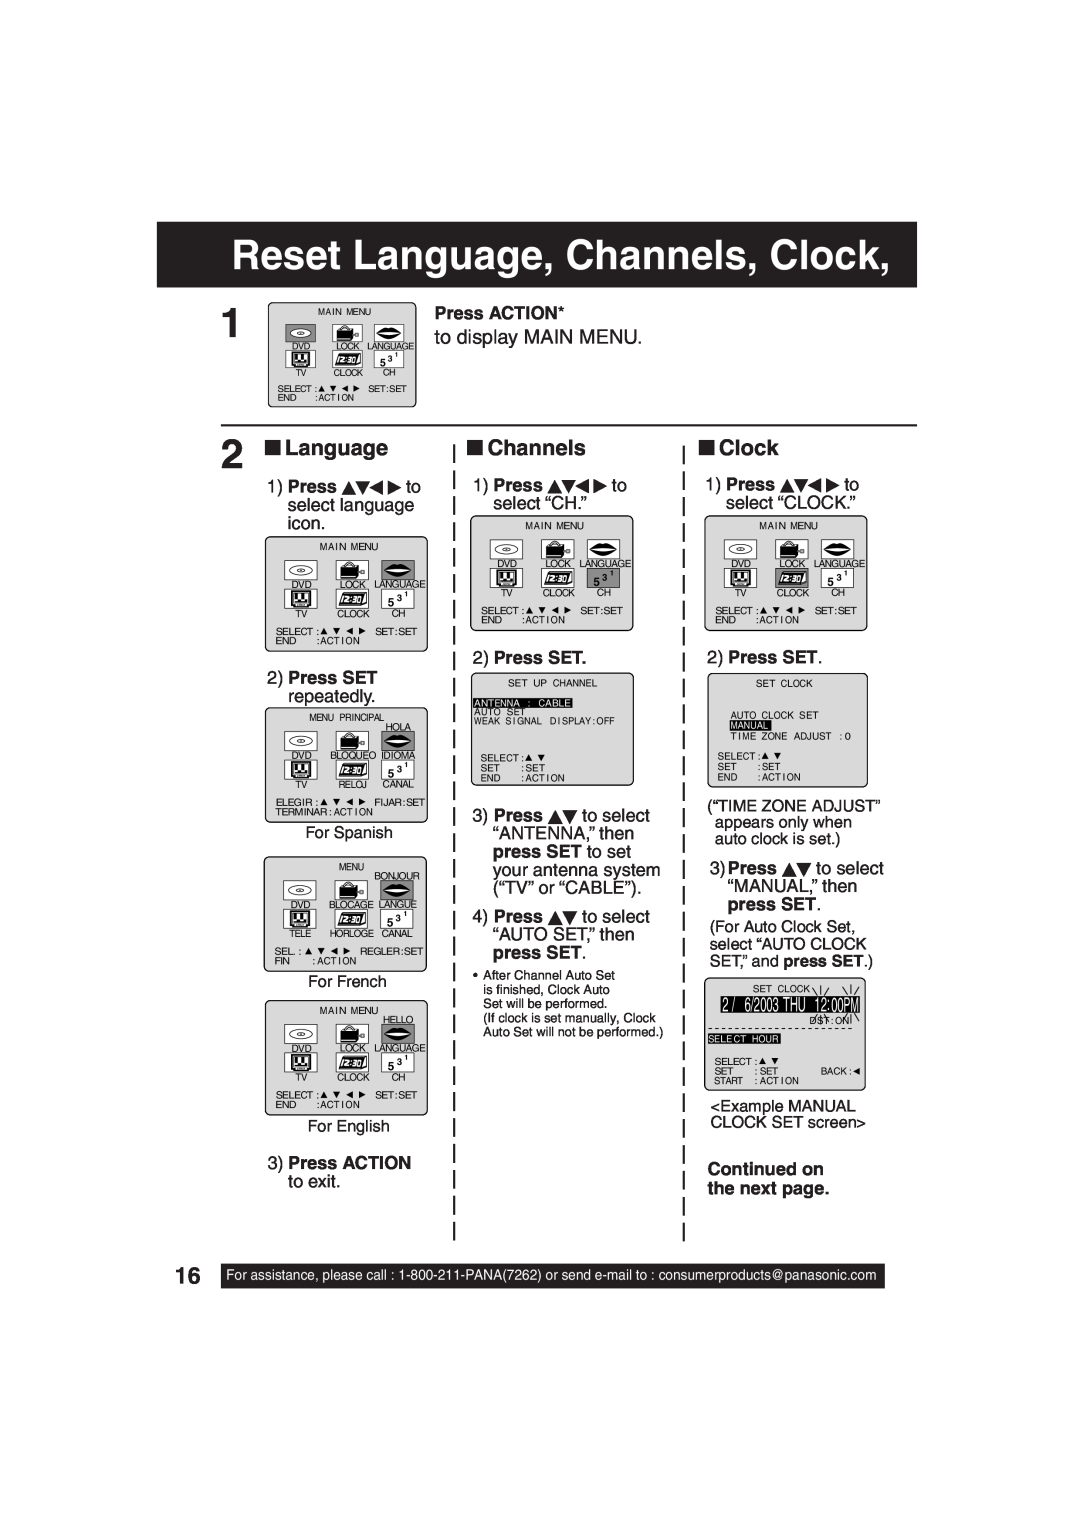 Panasonic PV-DF203 Reset Language, Channels, Clock, to display MAIN MENU, Press ACTION, Press to select language icon 